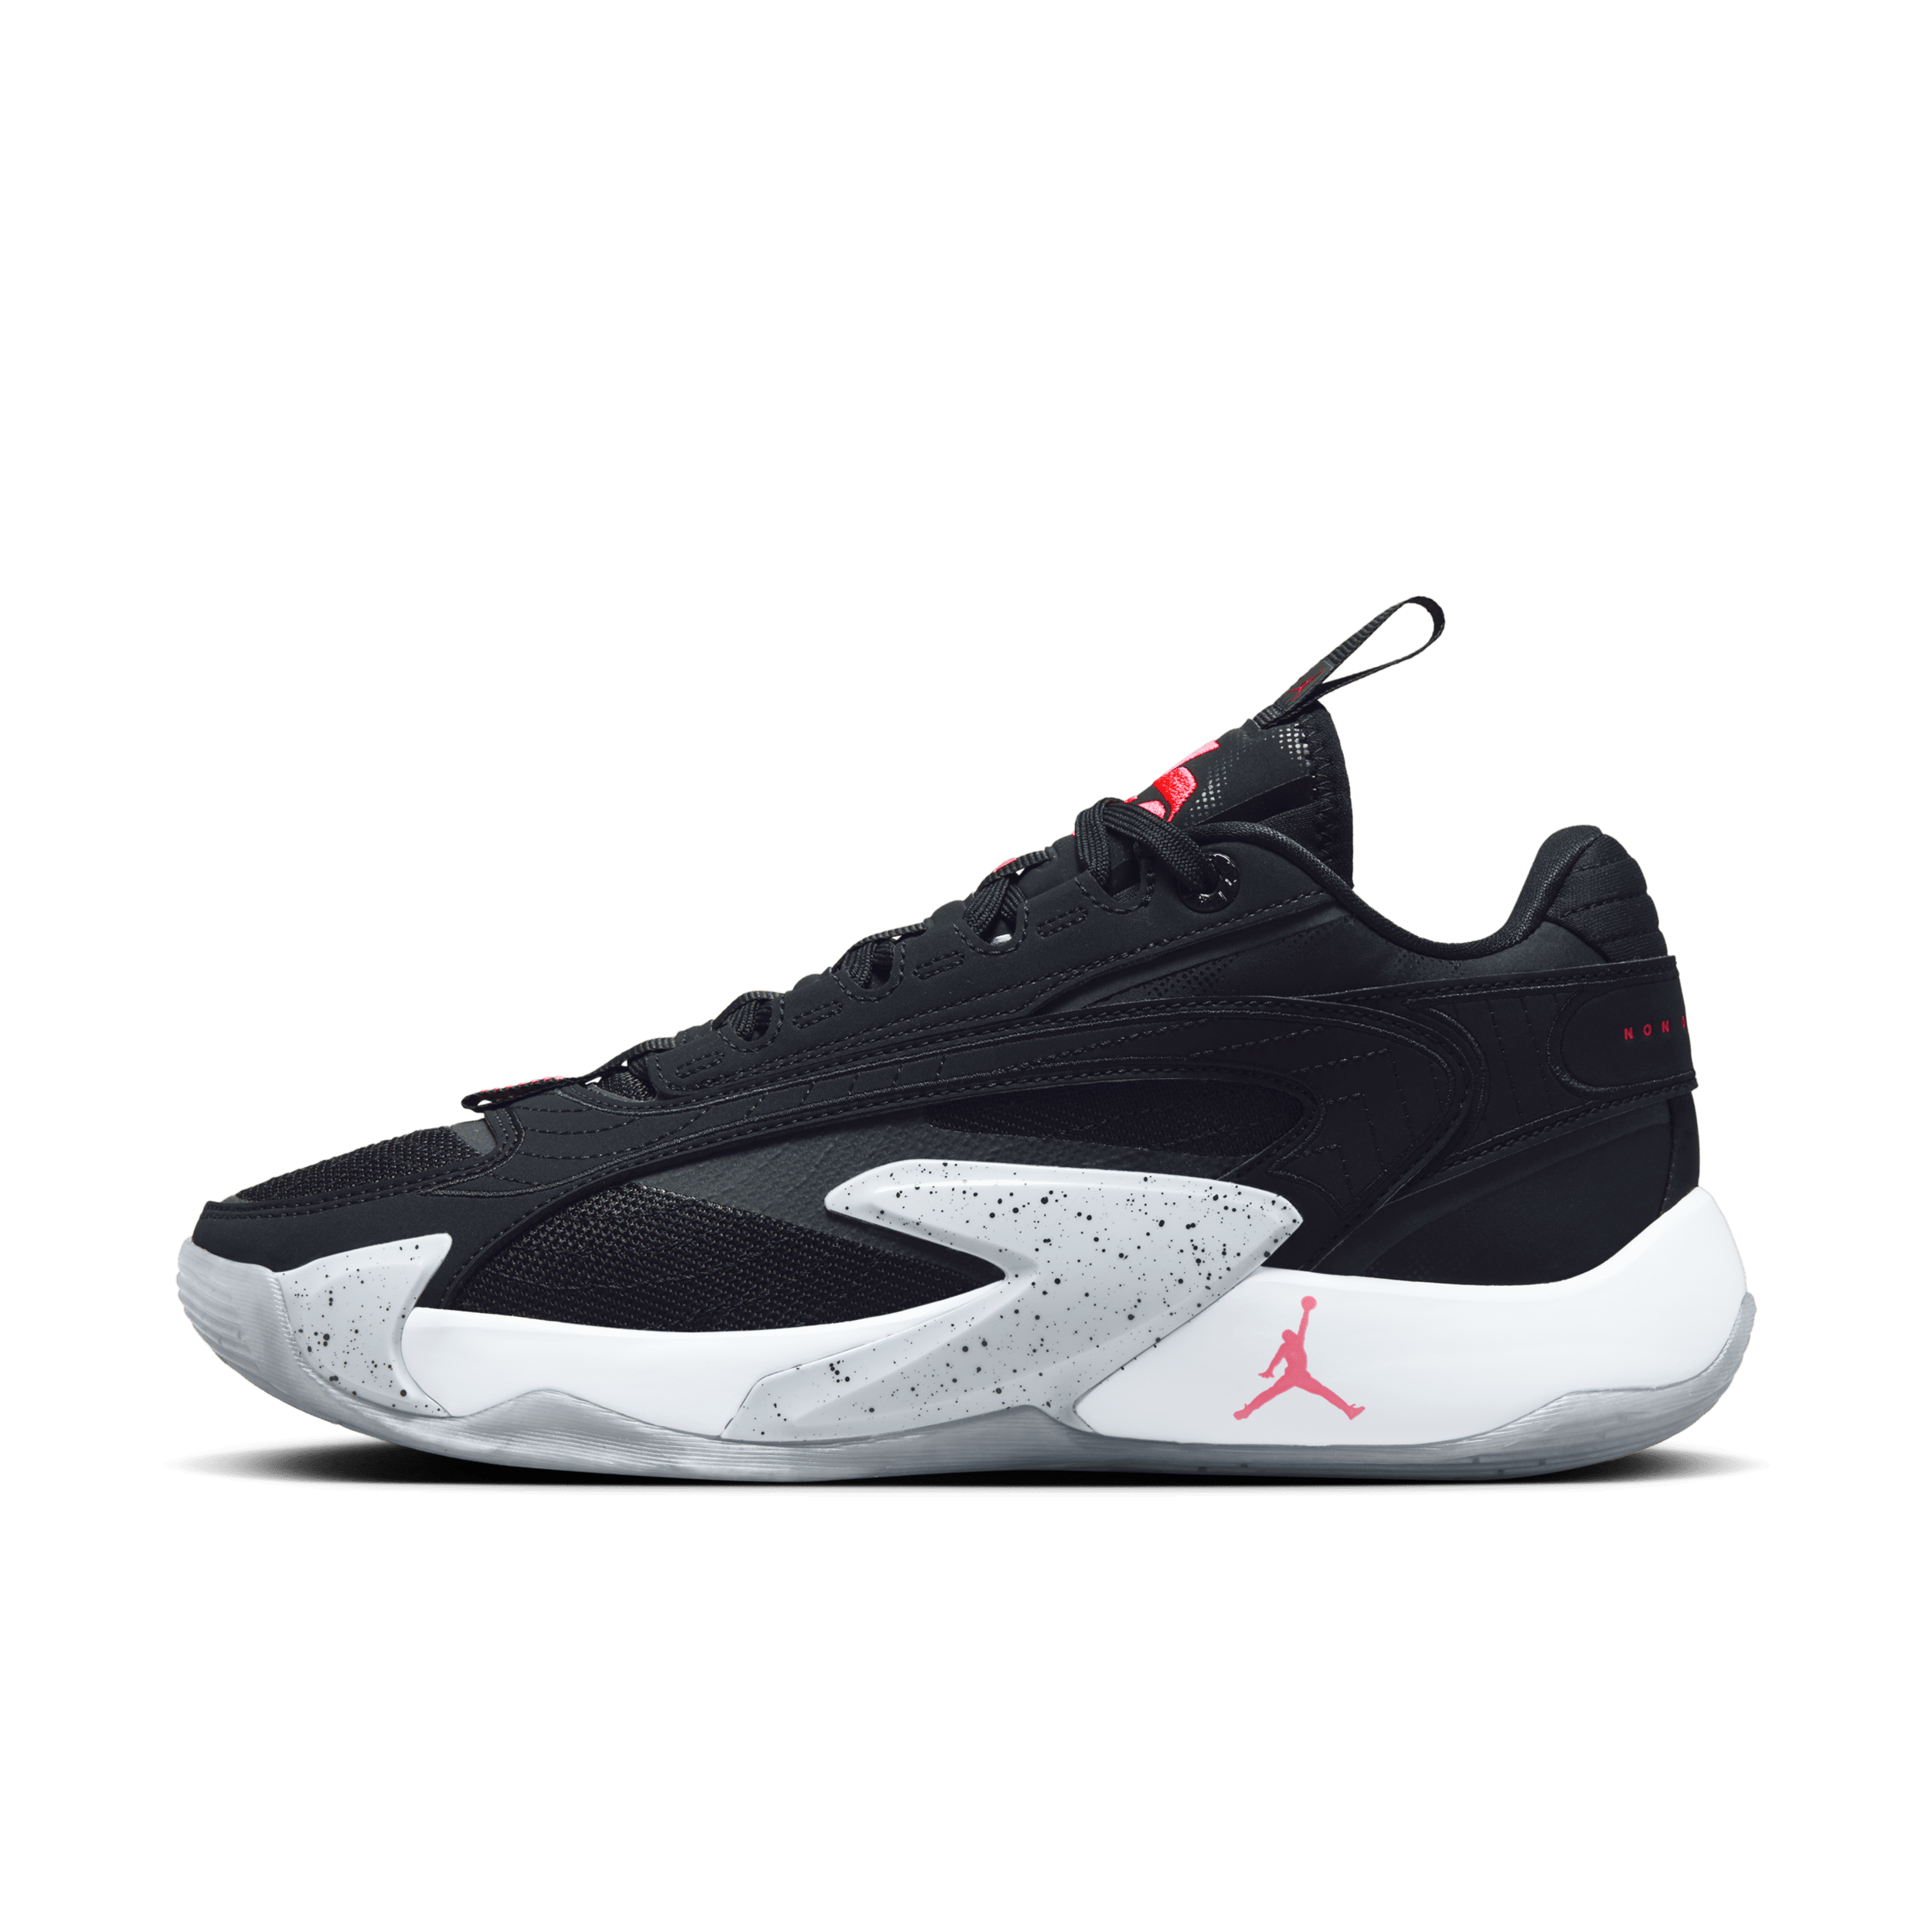 Nike Luka 2 'Bred' basketbalschoenen - Zwart